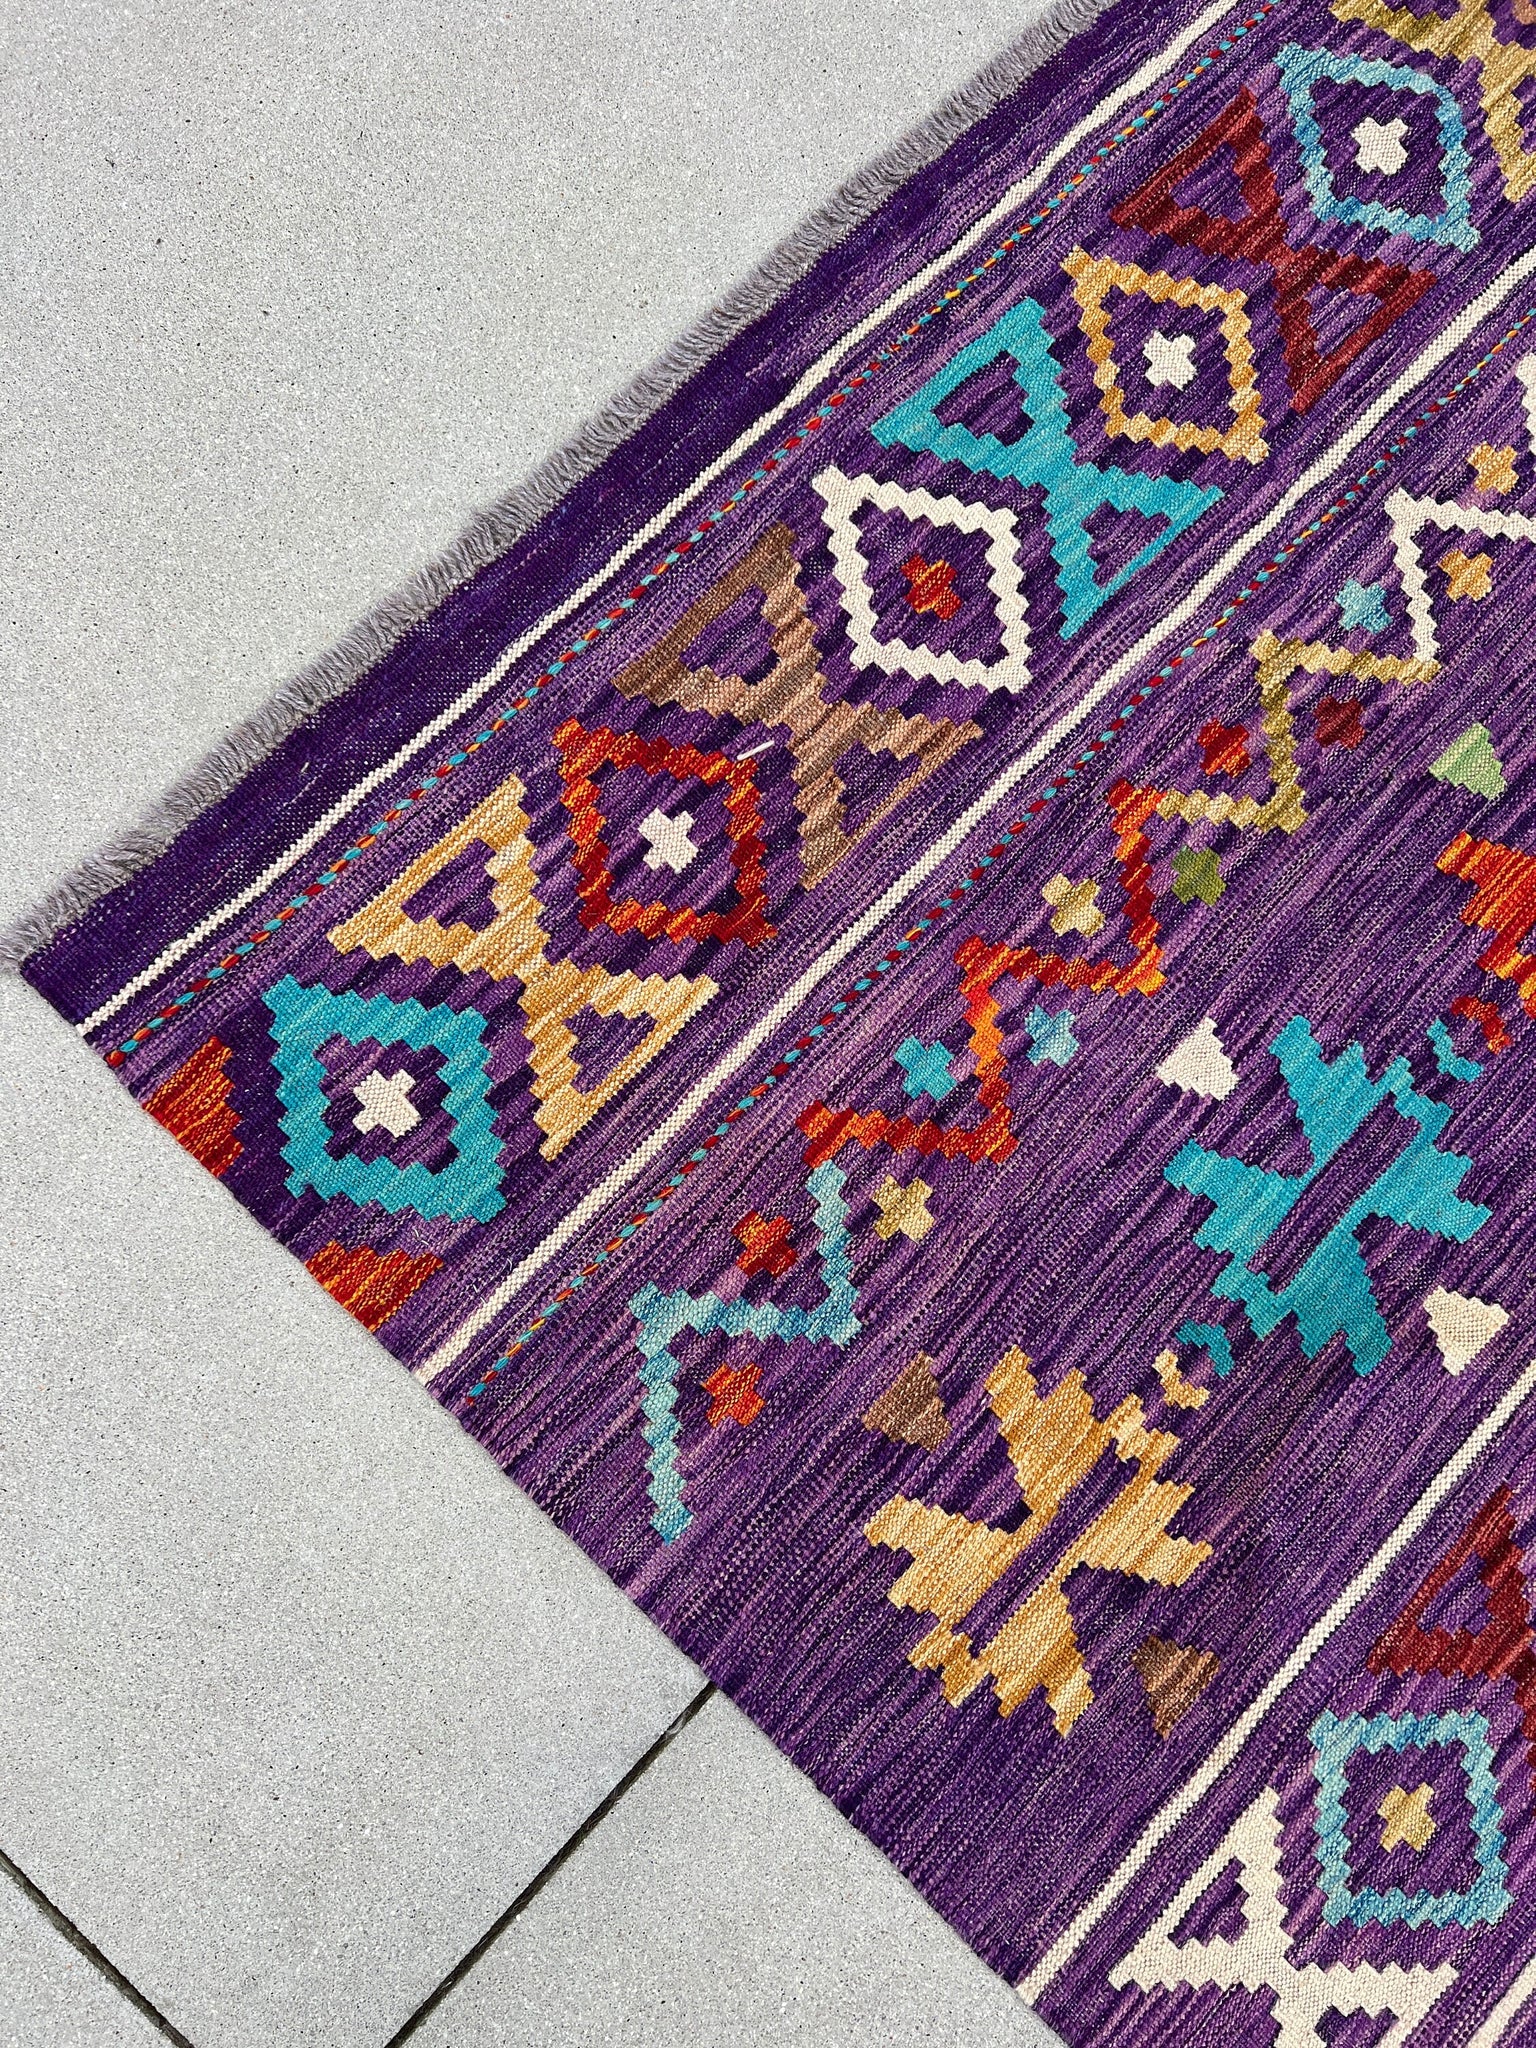 7x10 Handmade Afghan Kilim Rug | Purple Caramel Chocolate Brown Burnt Orange Red Turquoise Blue Ivory Green | Flatweave Wool Outdoor Patio